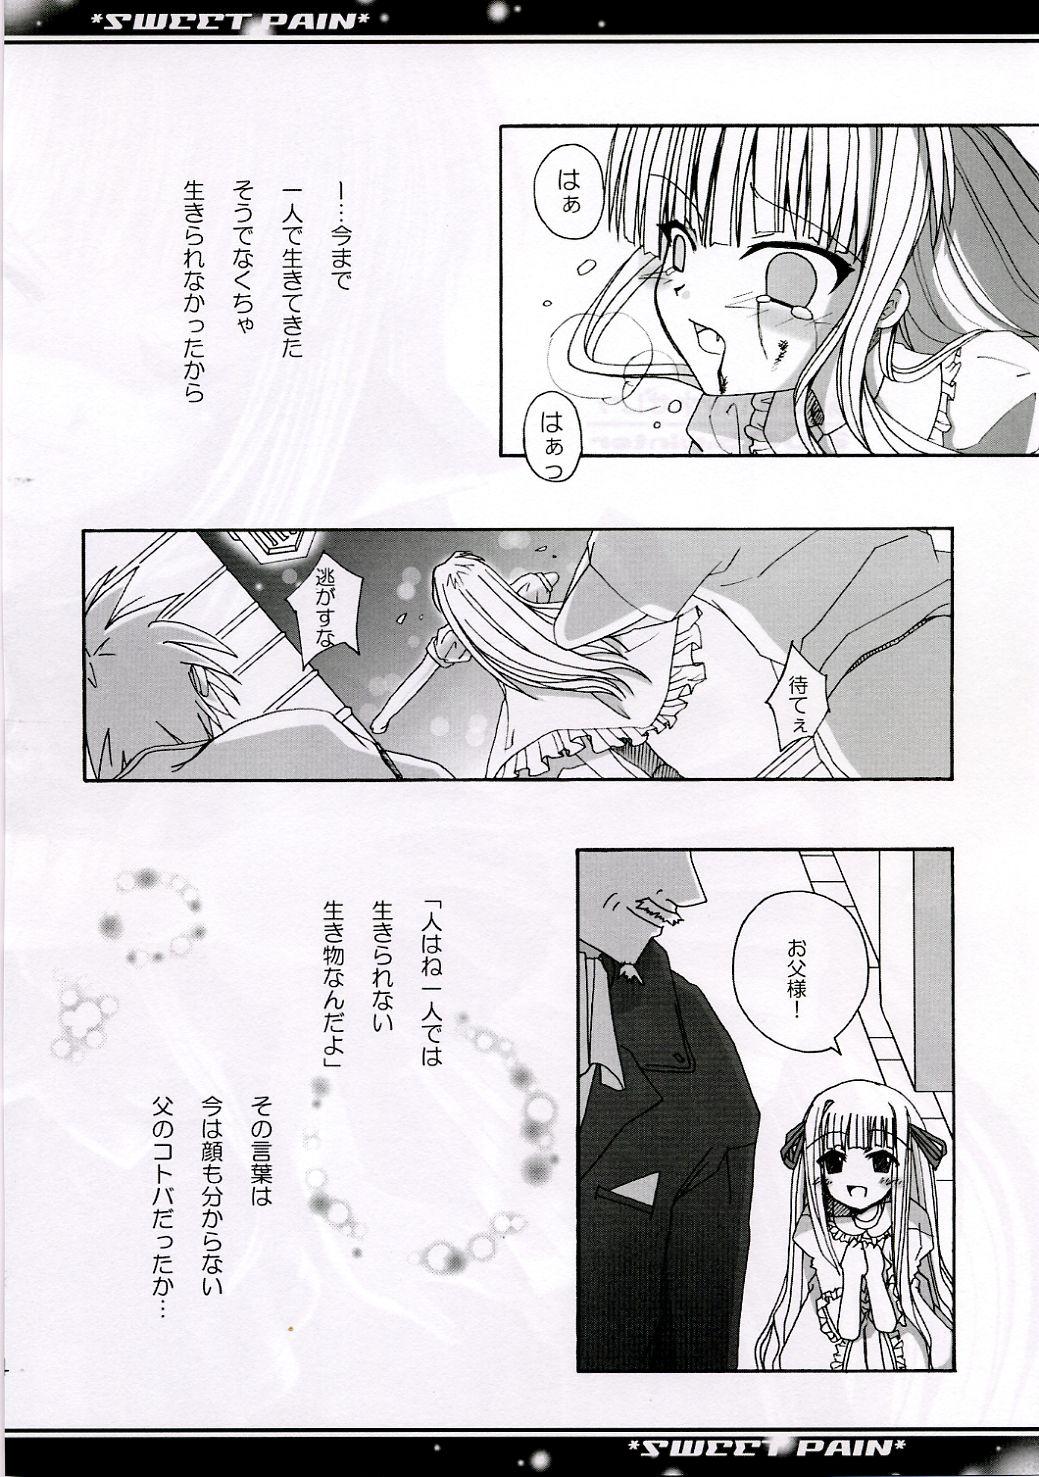 Ex Gf SWEET PAIN - Mahou sensei negima Pretty - Page 3